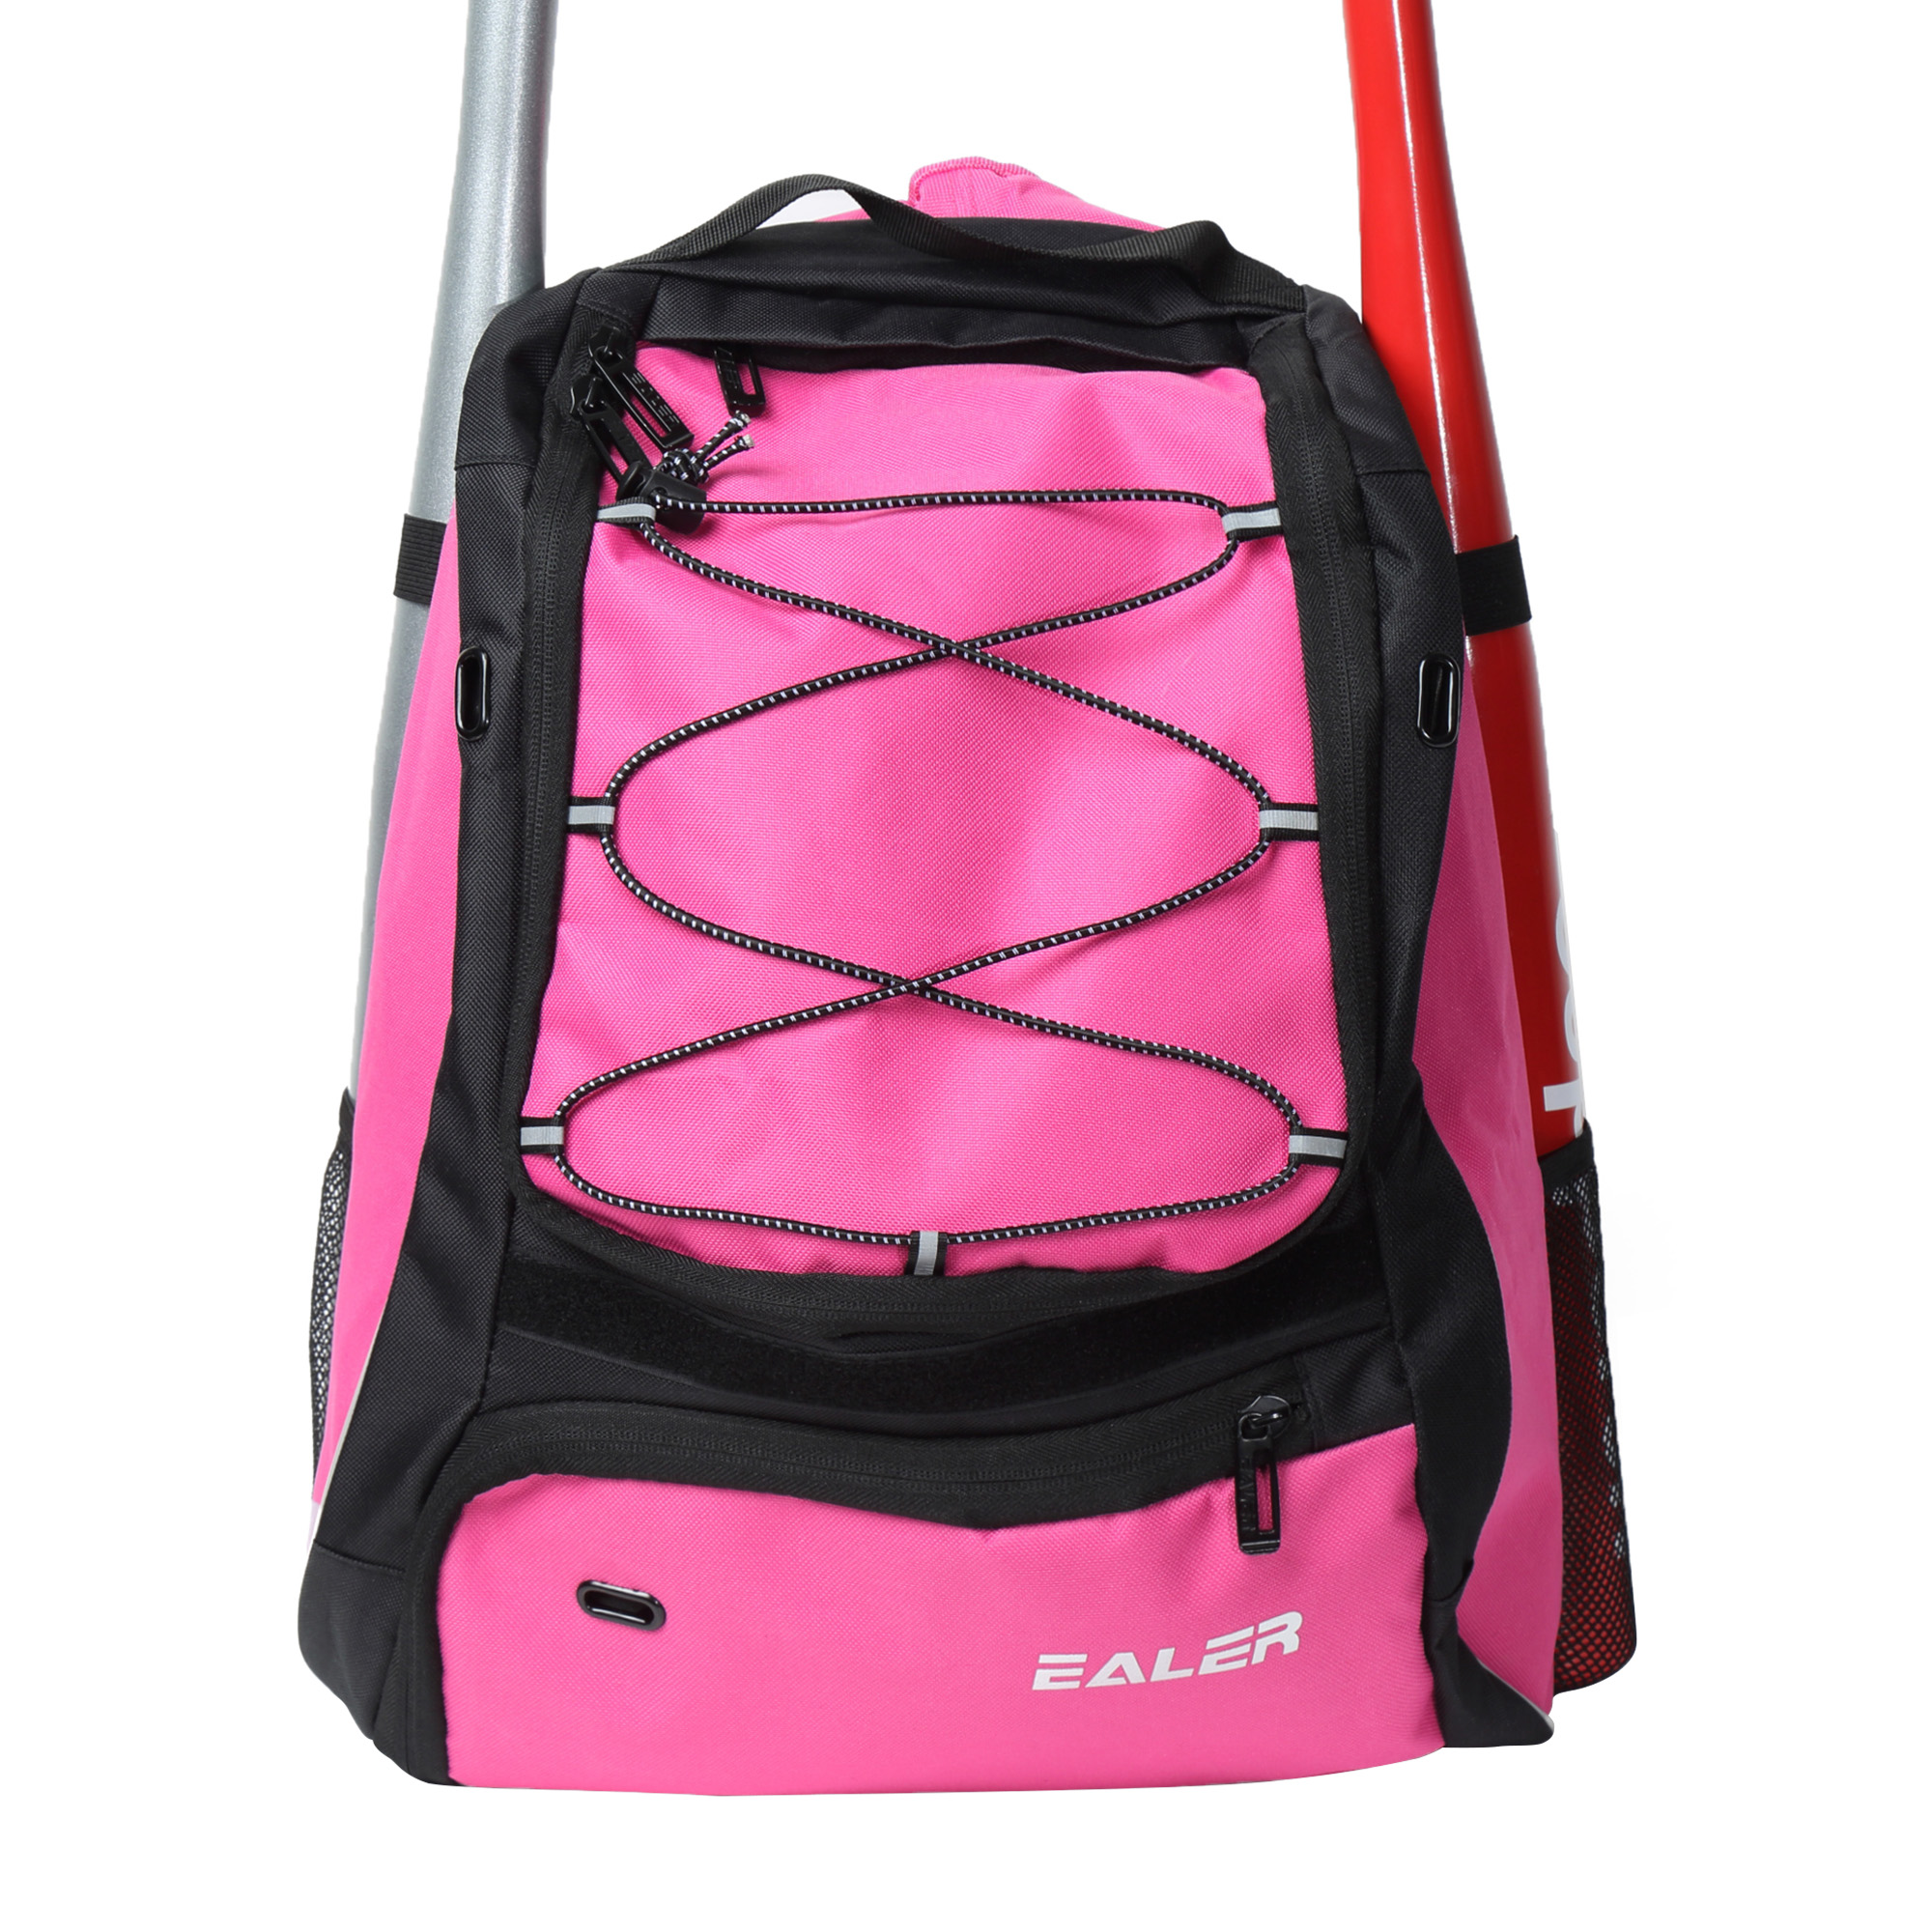 T-Ball  Softball Equipment  Gear for Youth and Zoea Baseball Bat Bag Backpack 